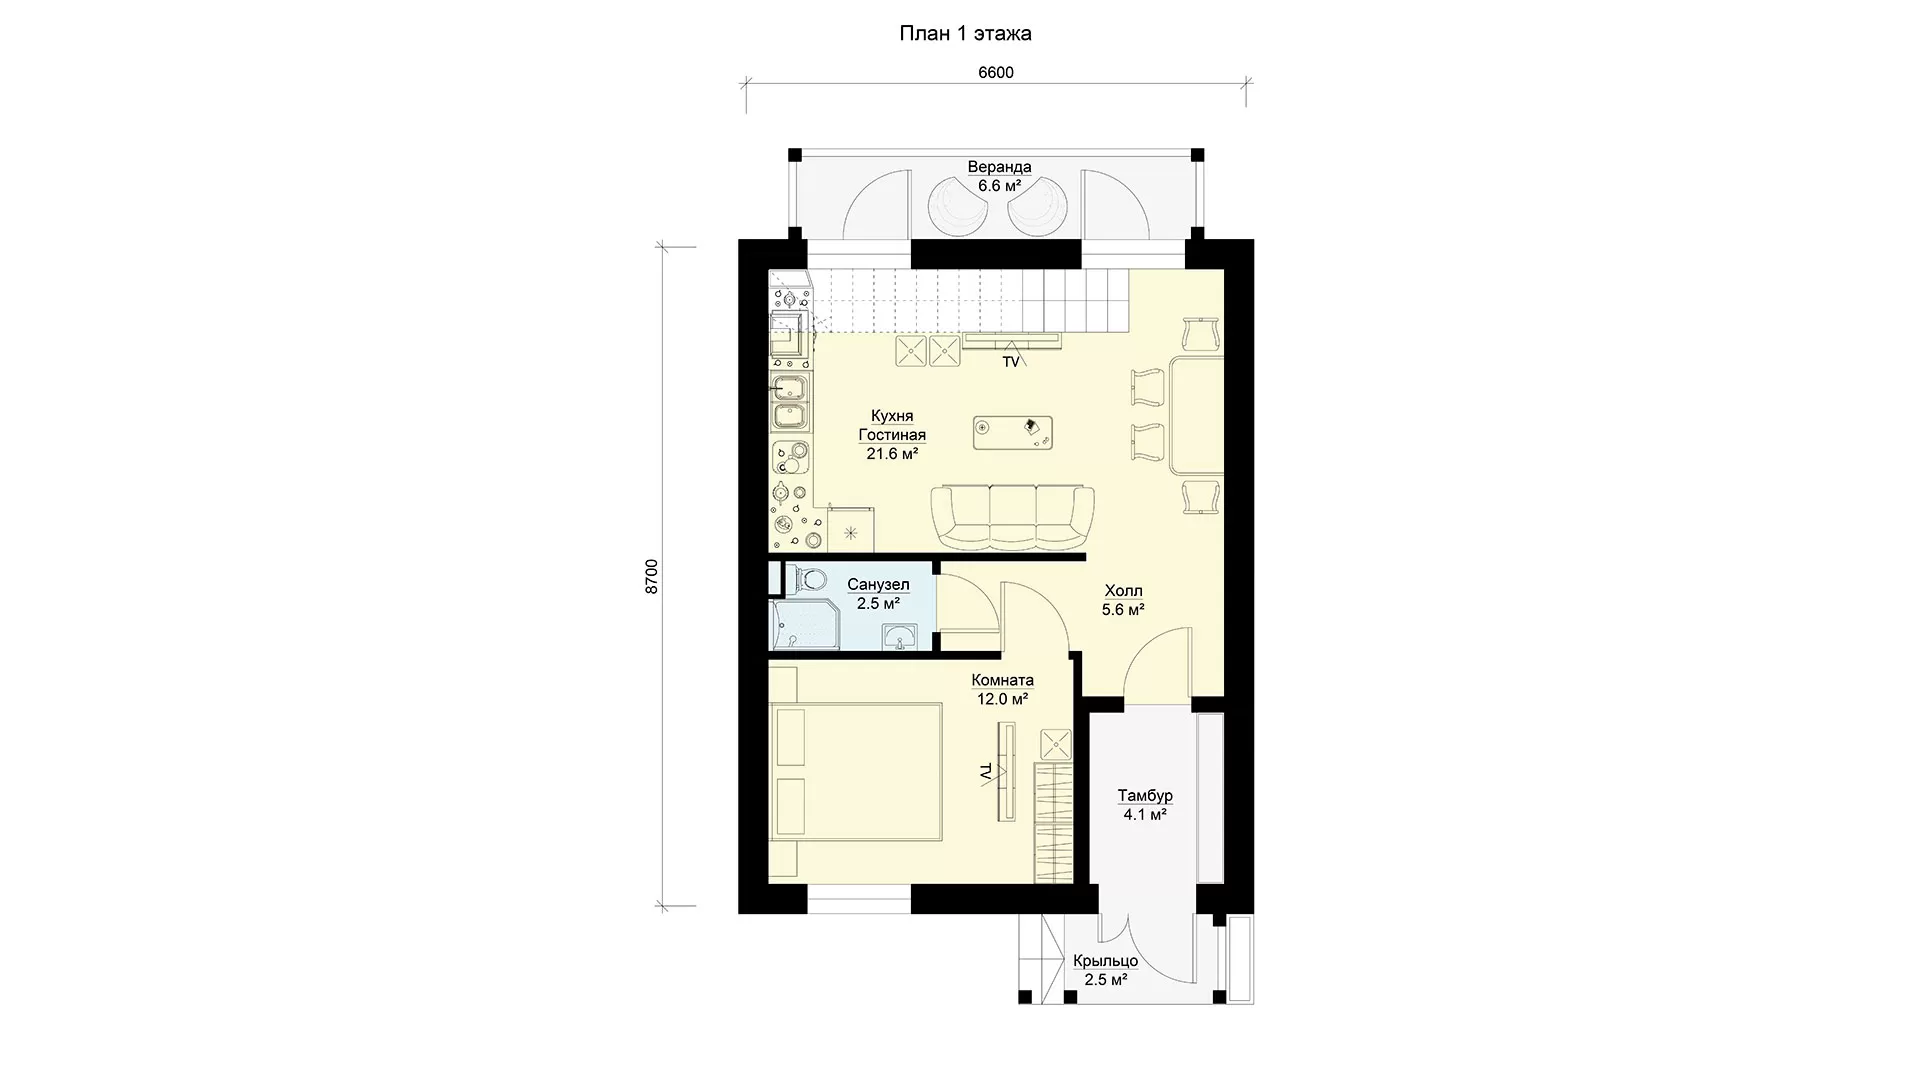 План первого этажа двухэтажного дома 7 на 9 БЭНПАН, проект БП-102